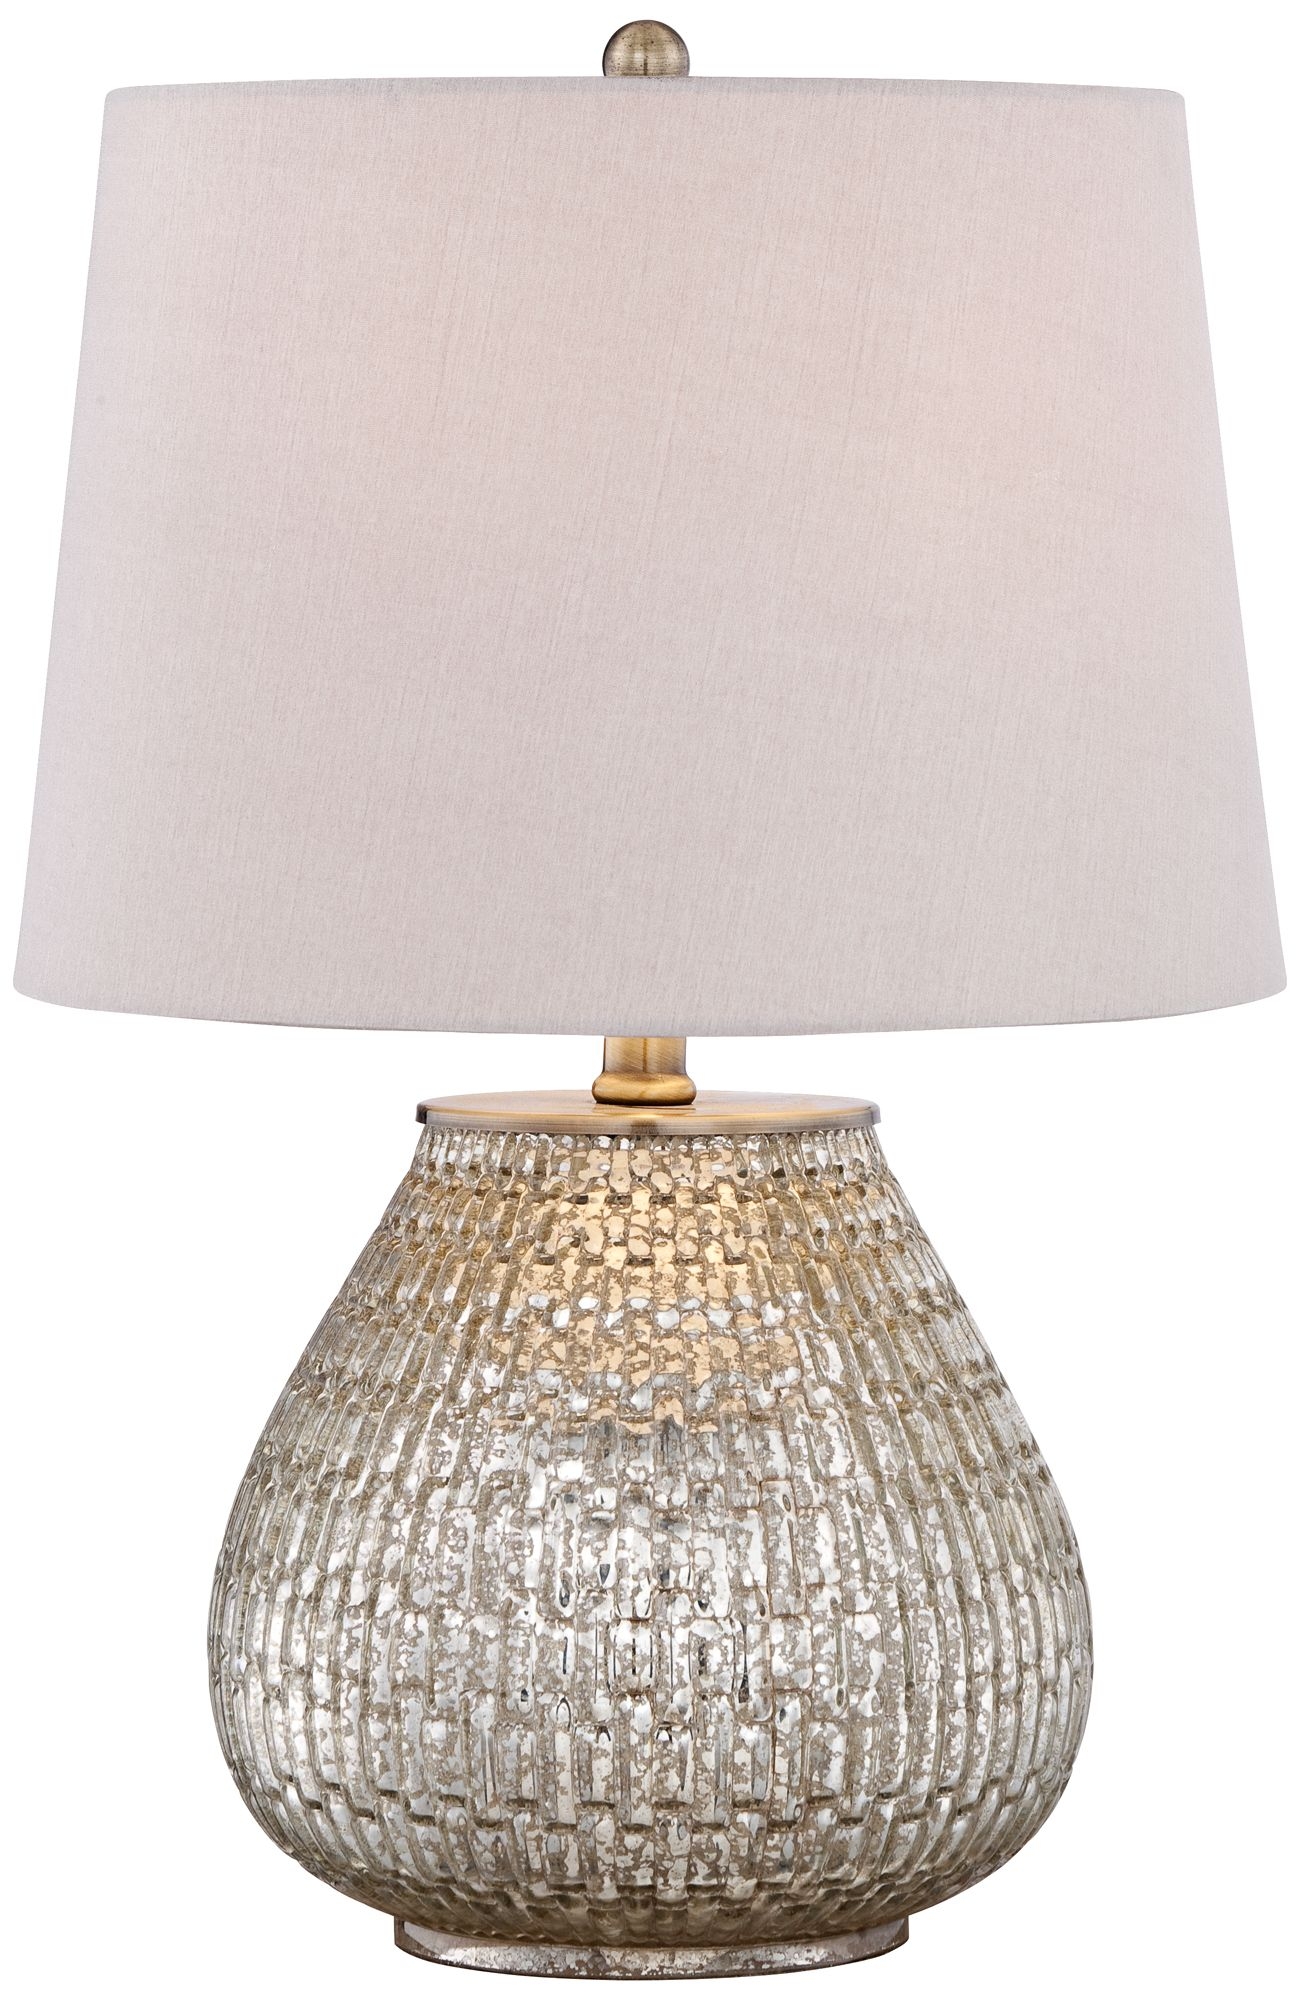 Zax Mercury Glass Table Lamp - Image 0